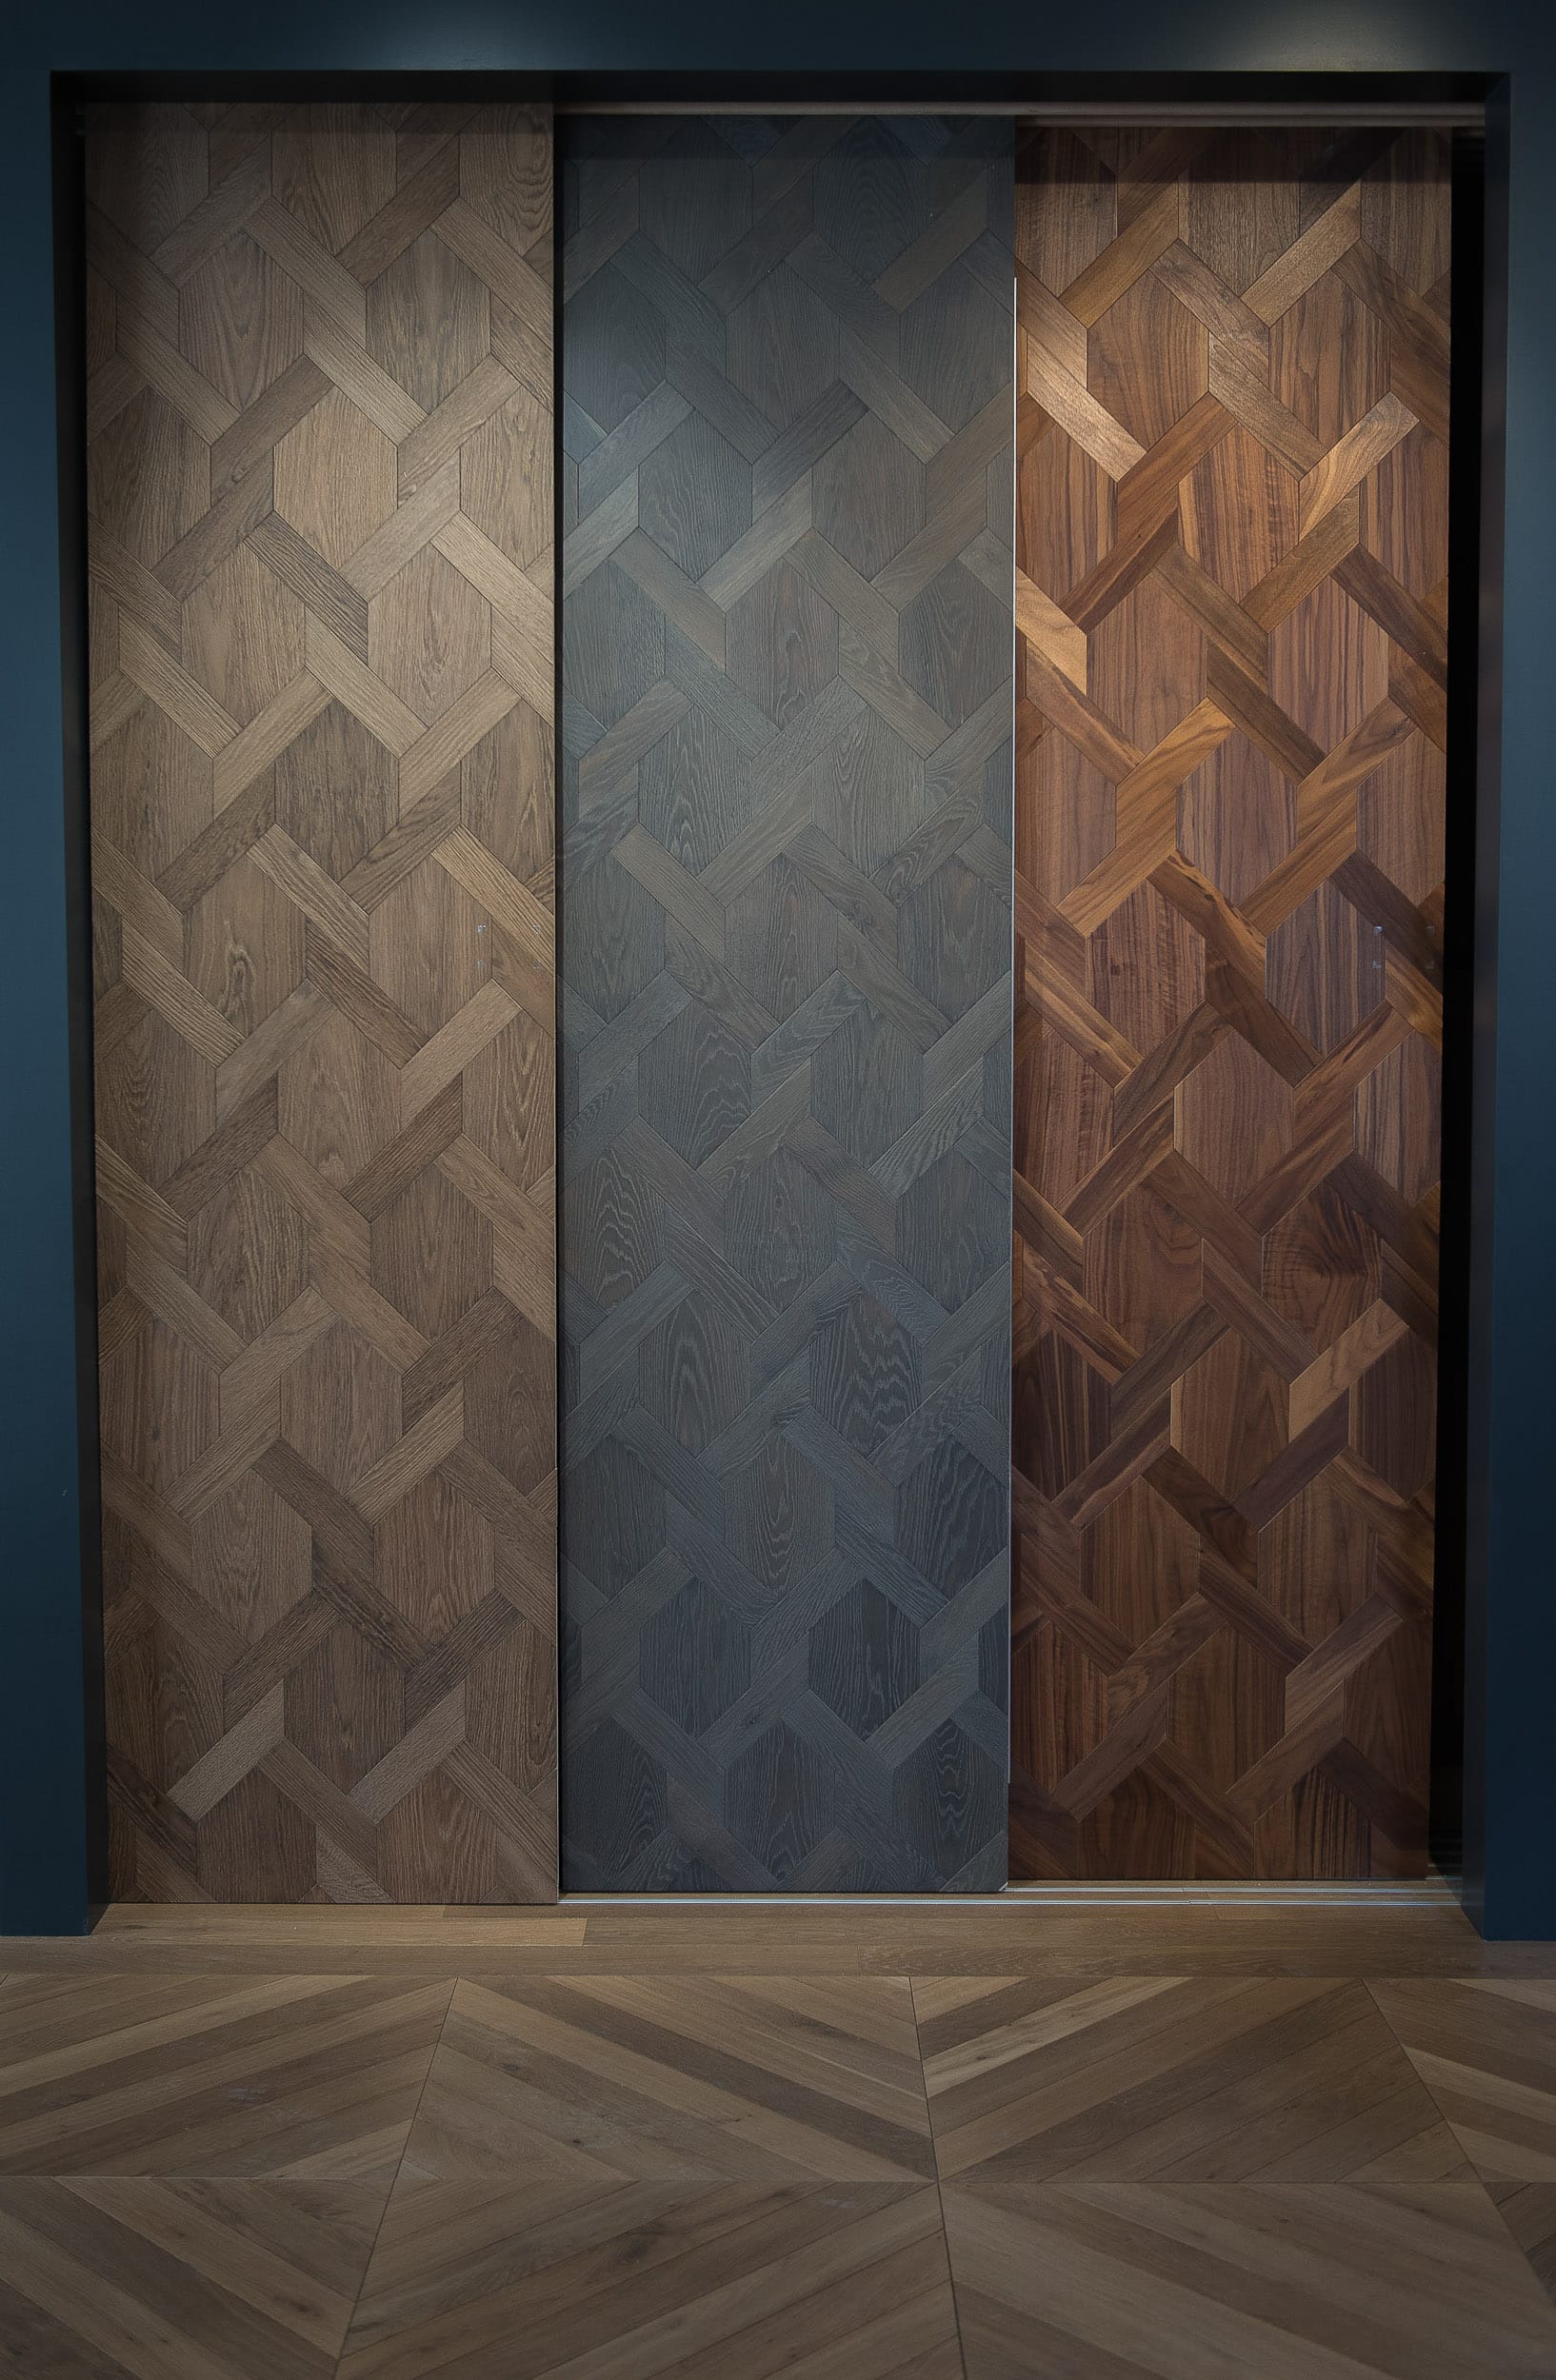 3 display panels of mansion weave wood flooring